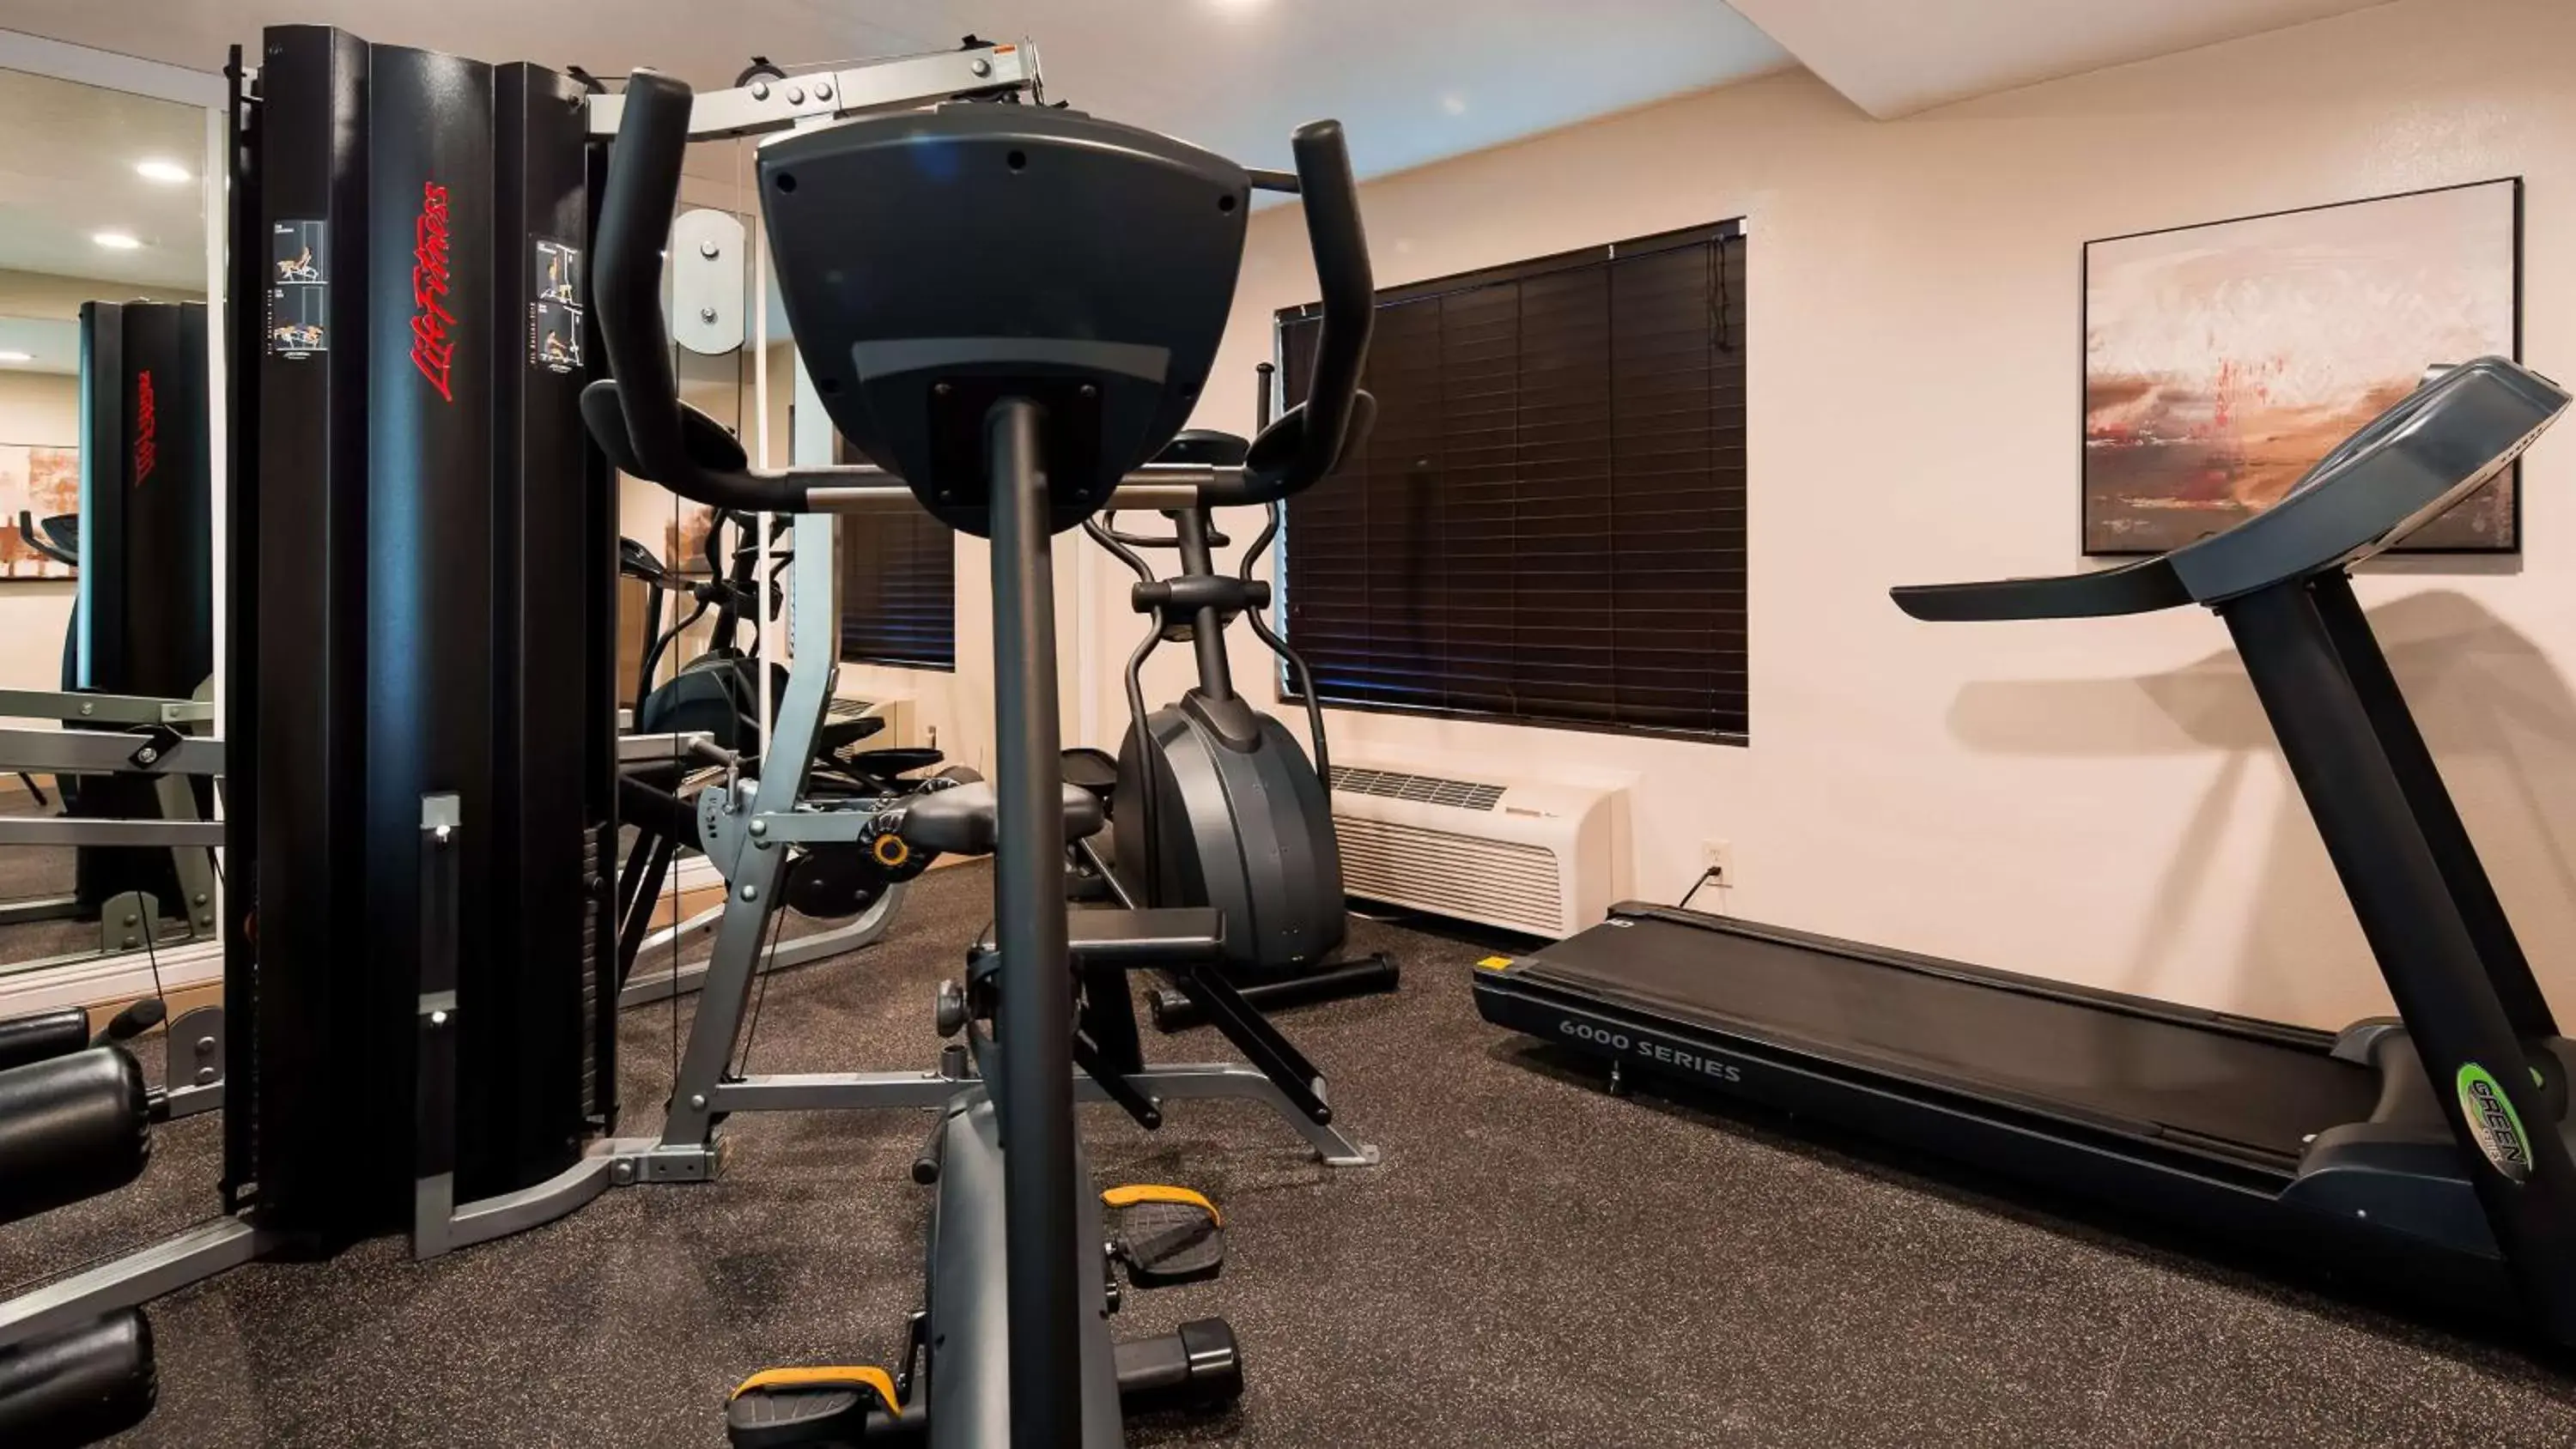 Fitness centre/facilities, Fitness Center/Facilities in Best Western Plus Newport Mesa Inn